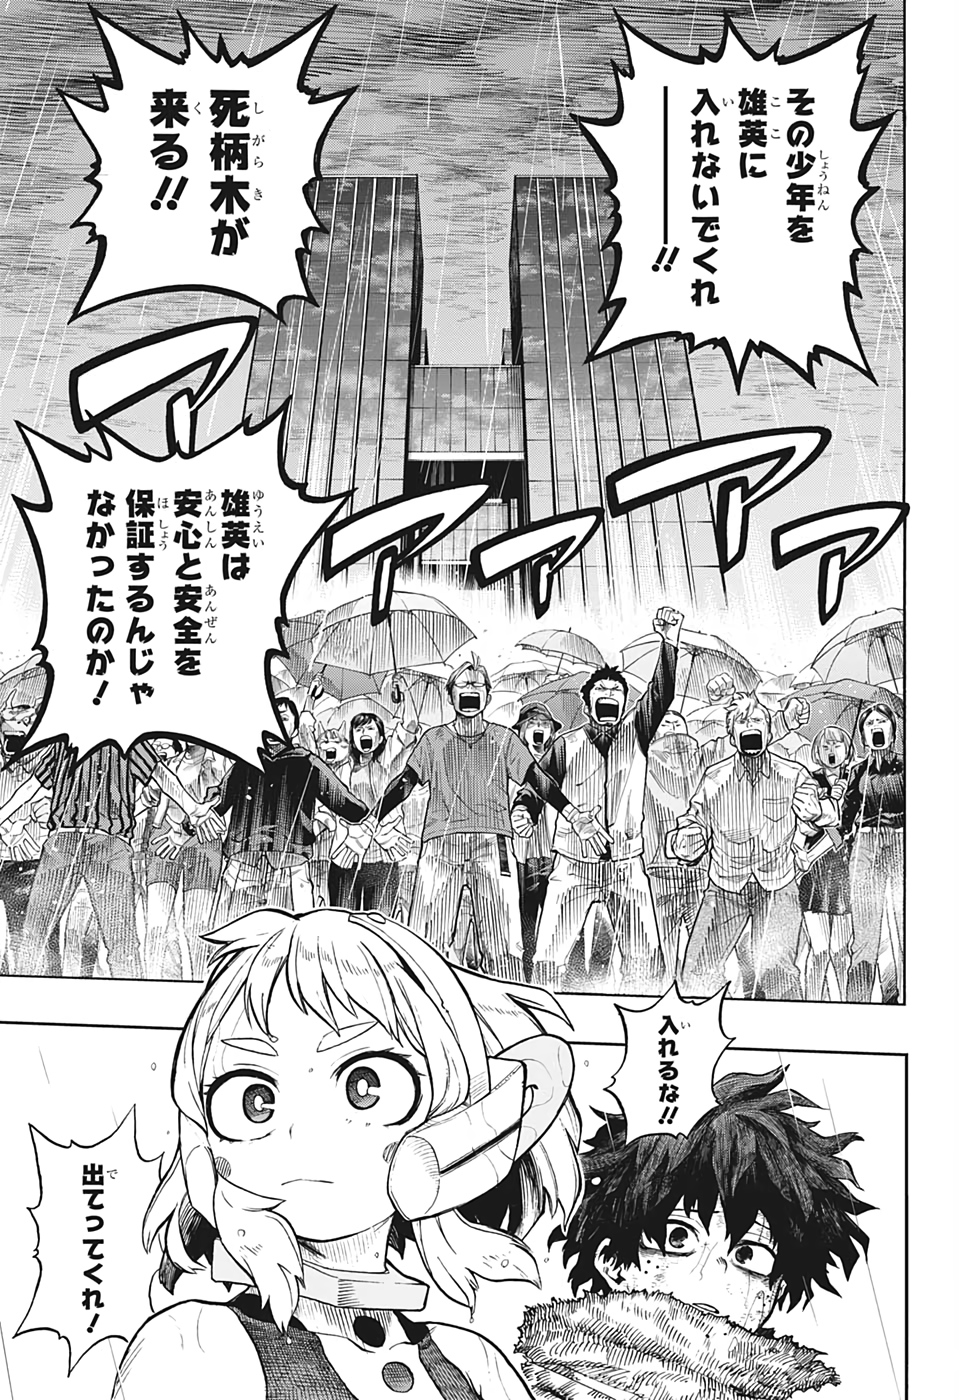 Boku no Hero Academia - Chapter 323 - Page 7